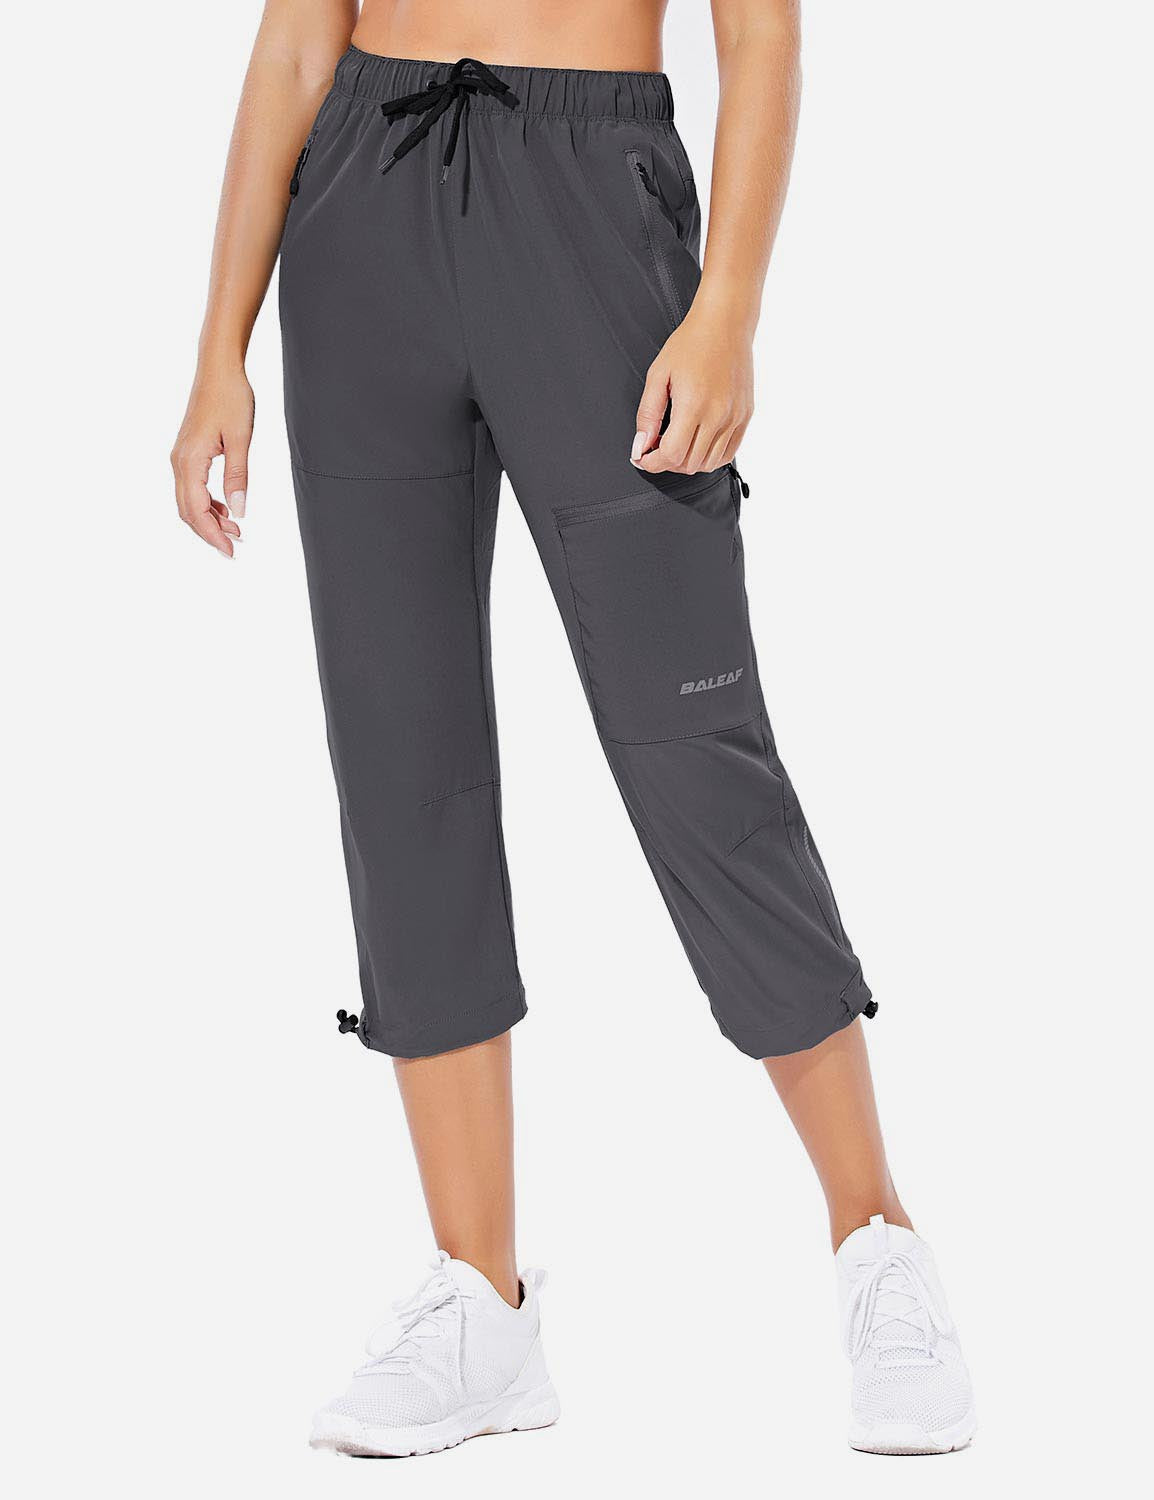 NWT* BALEAF Womens Size XL Black With Side Pockets Active Capri Pants #689  